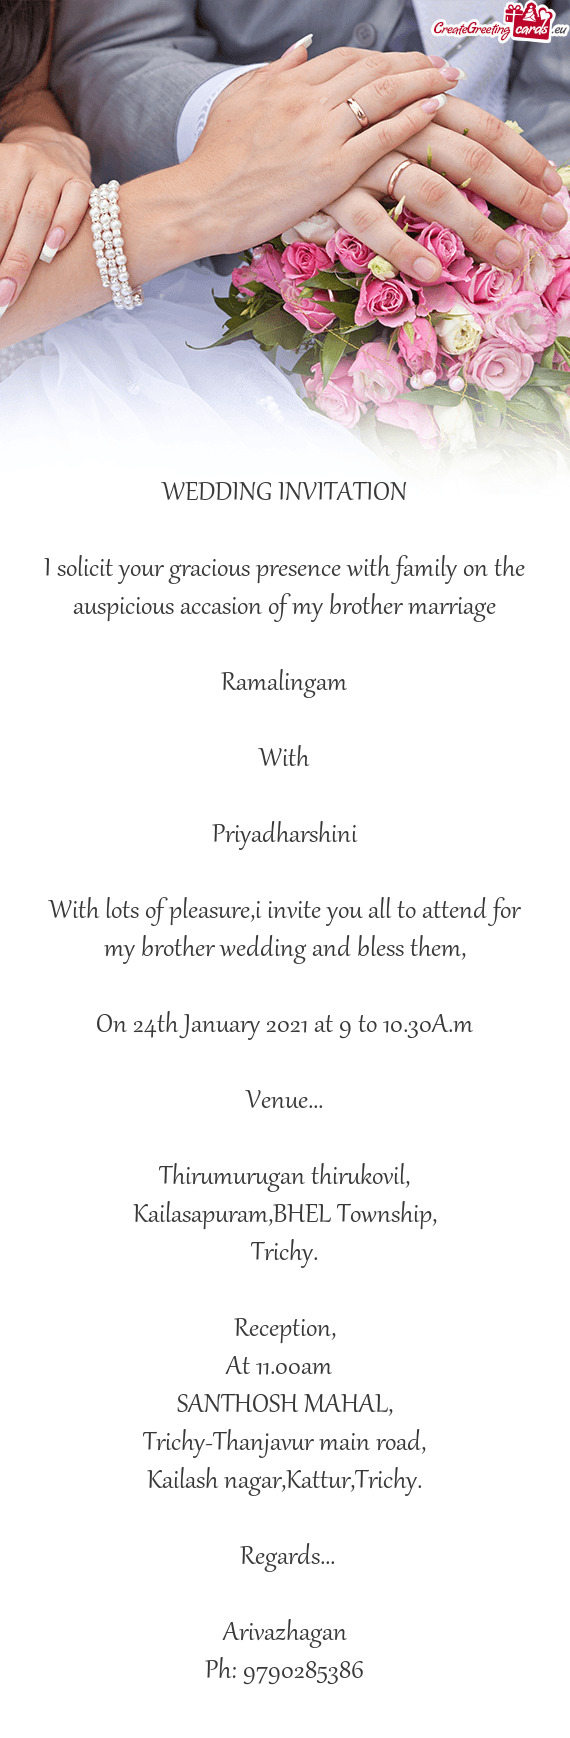 Brother marriage
 
 Ramalingam
 
 With
 
 Priyadharshini
 
 With lots of pleasure